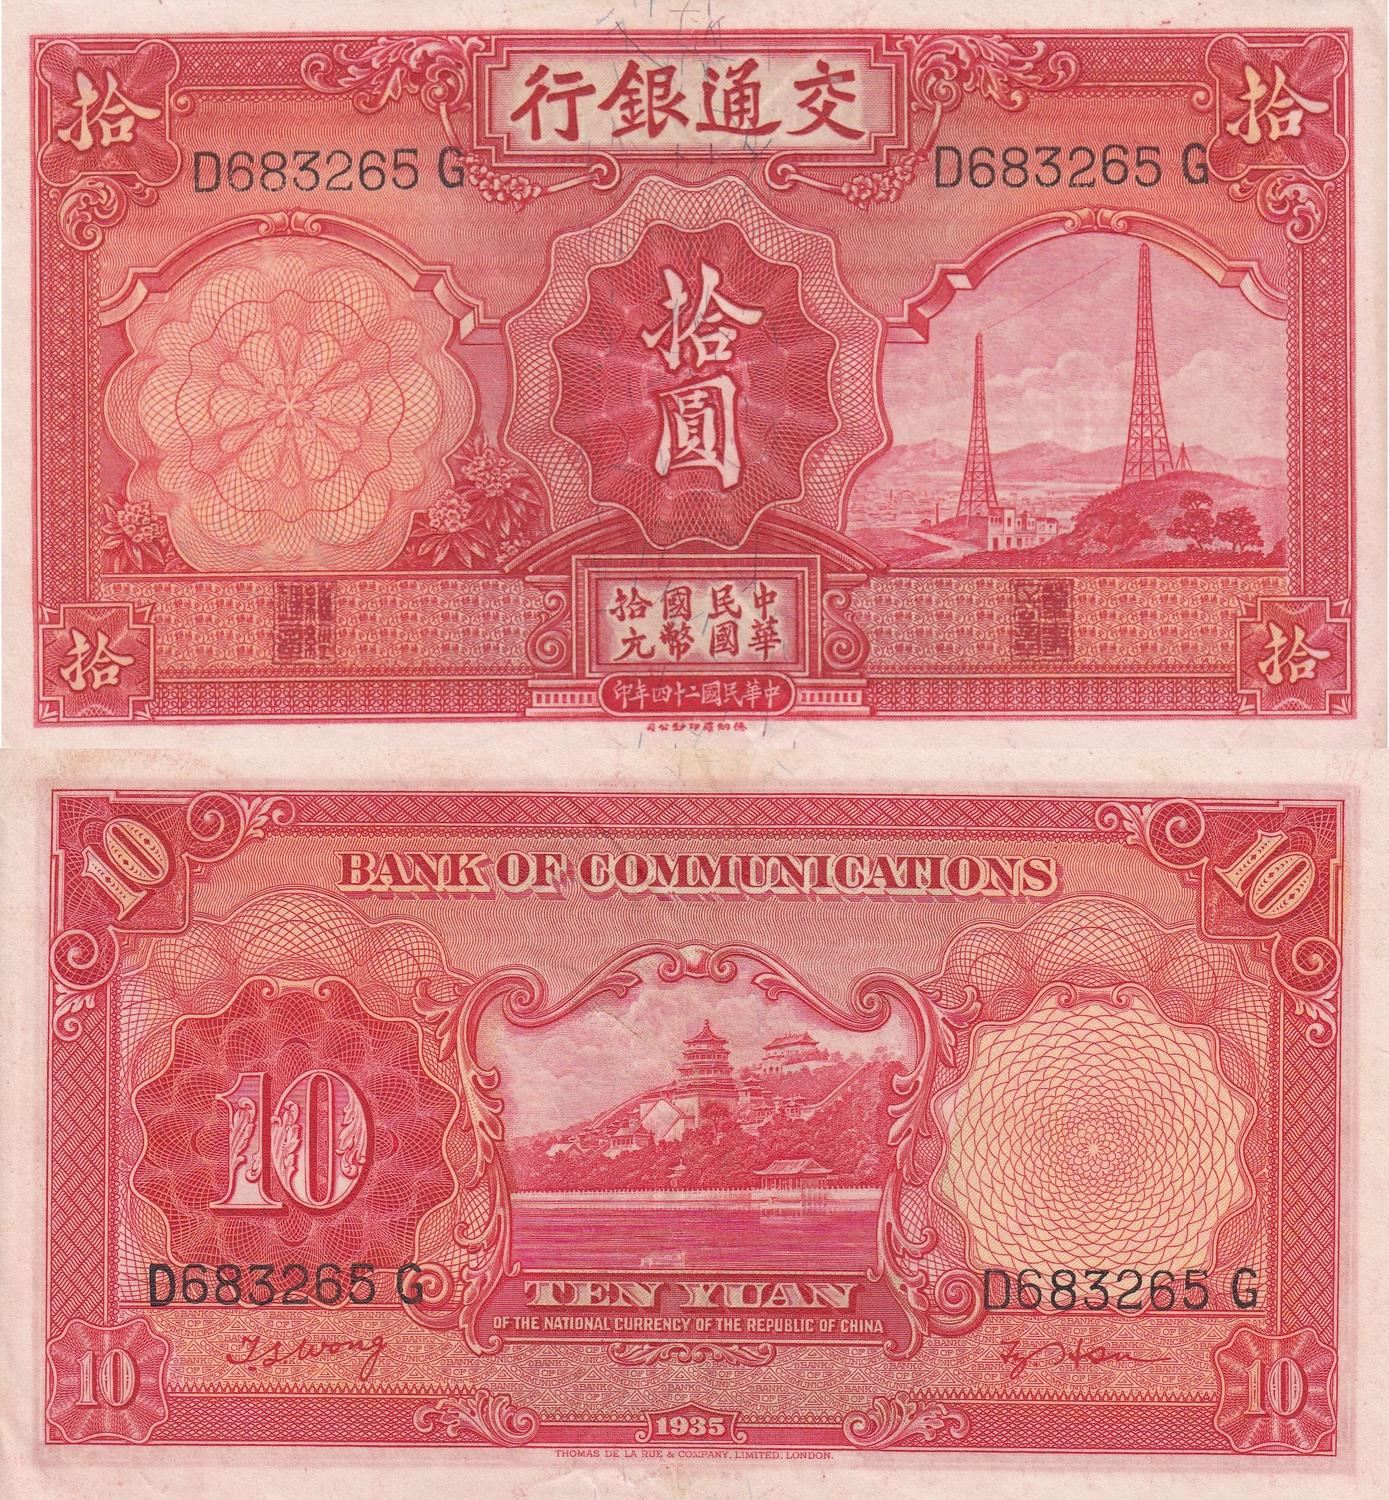 REPUBLIC OF CHINA 10 YUAN 1935 P 155 BANK OF COMMUNICATIONS AUNC 